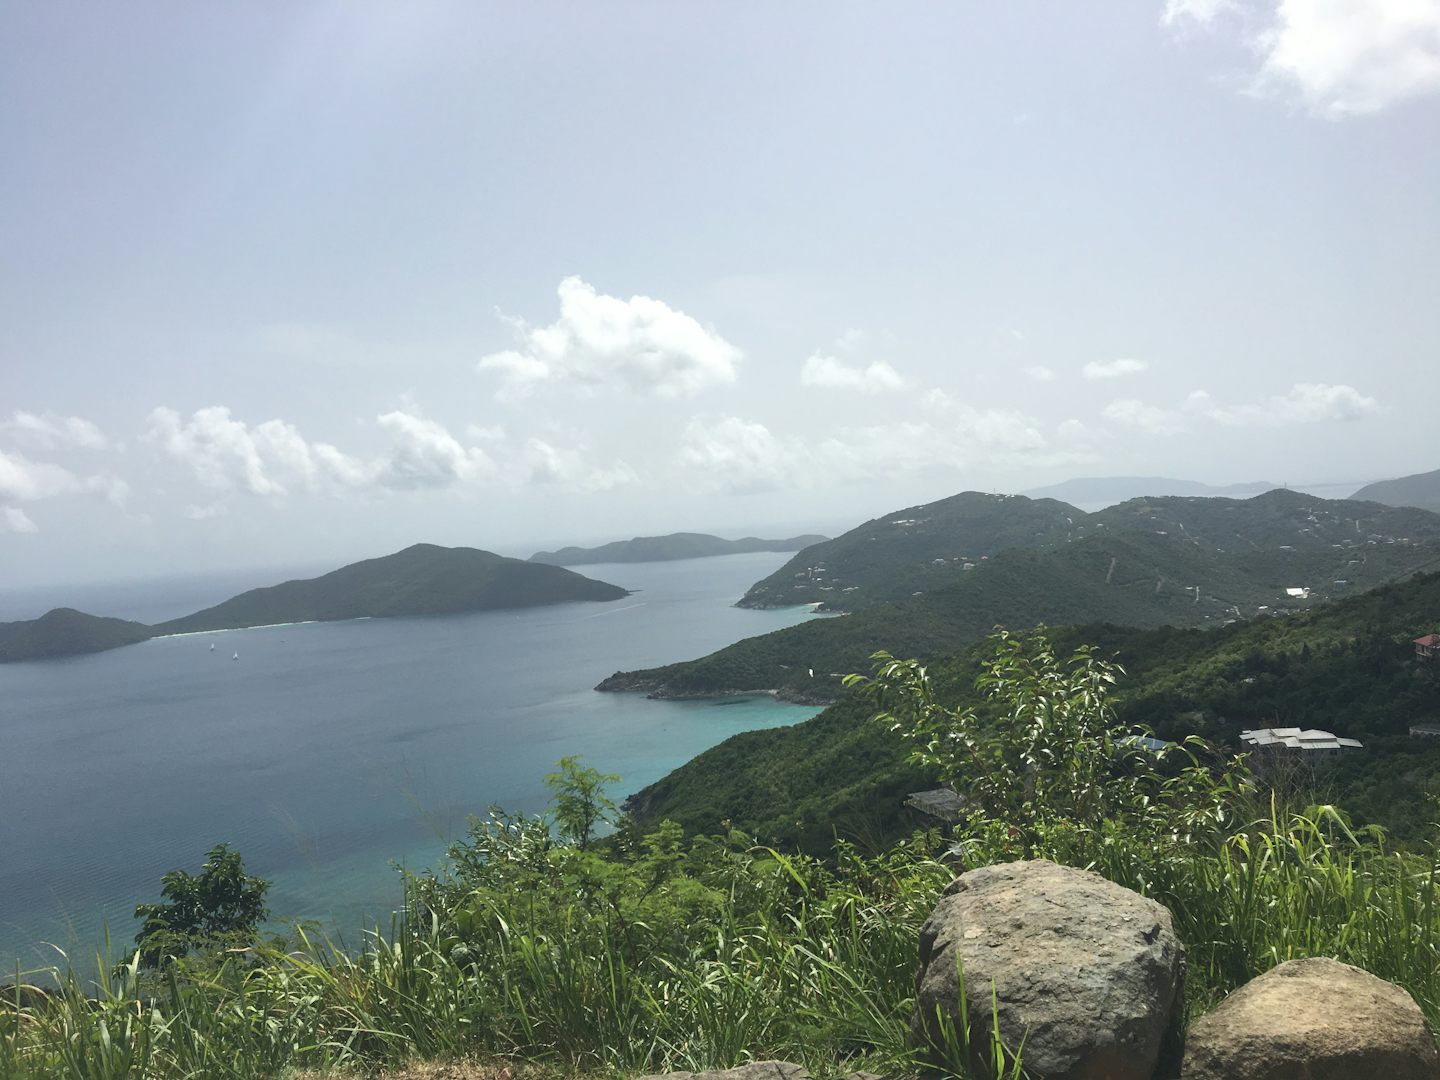 This was on Tortola.  Beautiful island